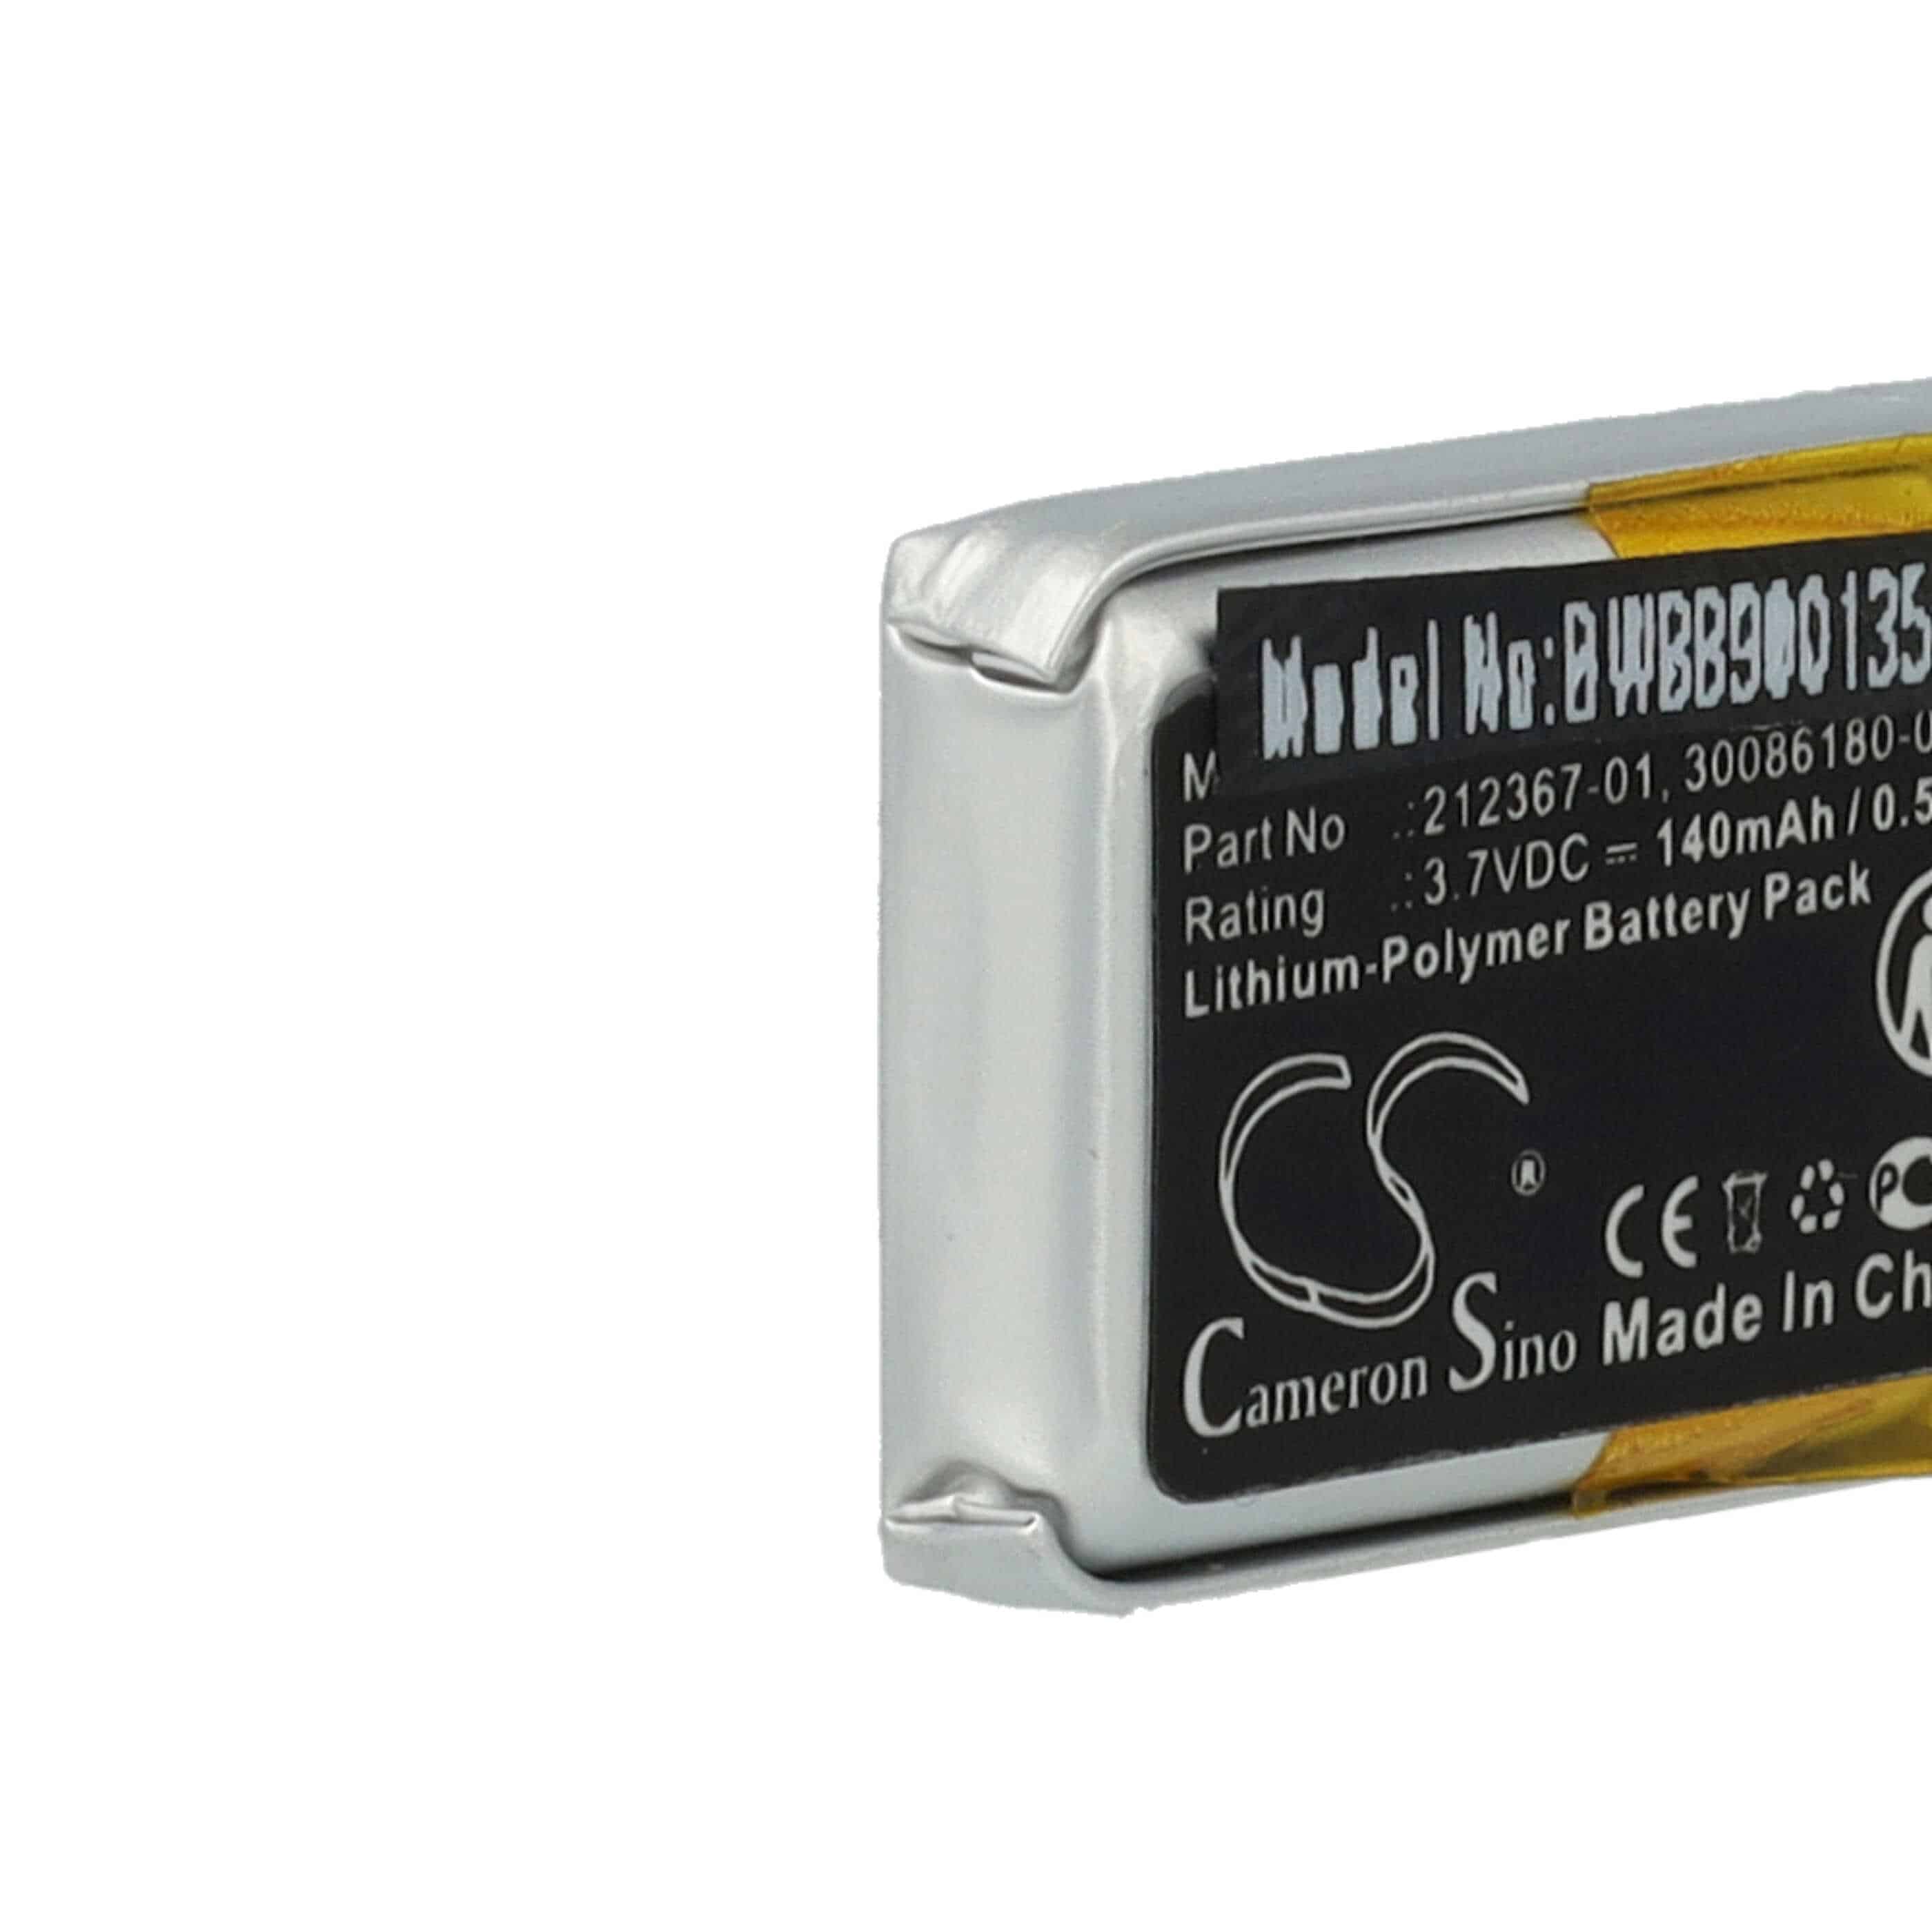 Wireless Headset Battery Replacement for Plantronics 212367-01 (3 pin), 212367-01 - 140mAh 3.7V Li-polymer